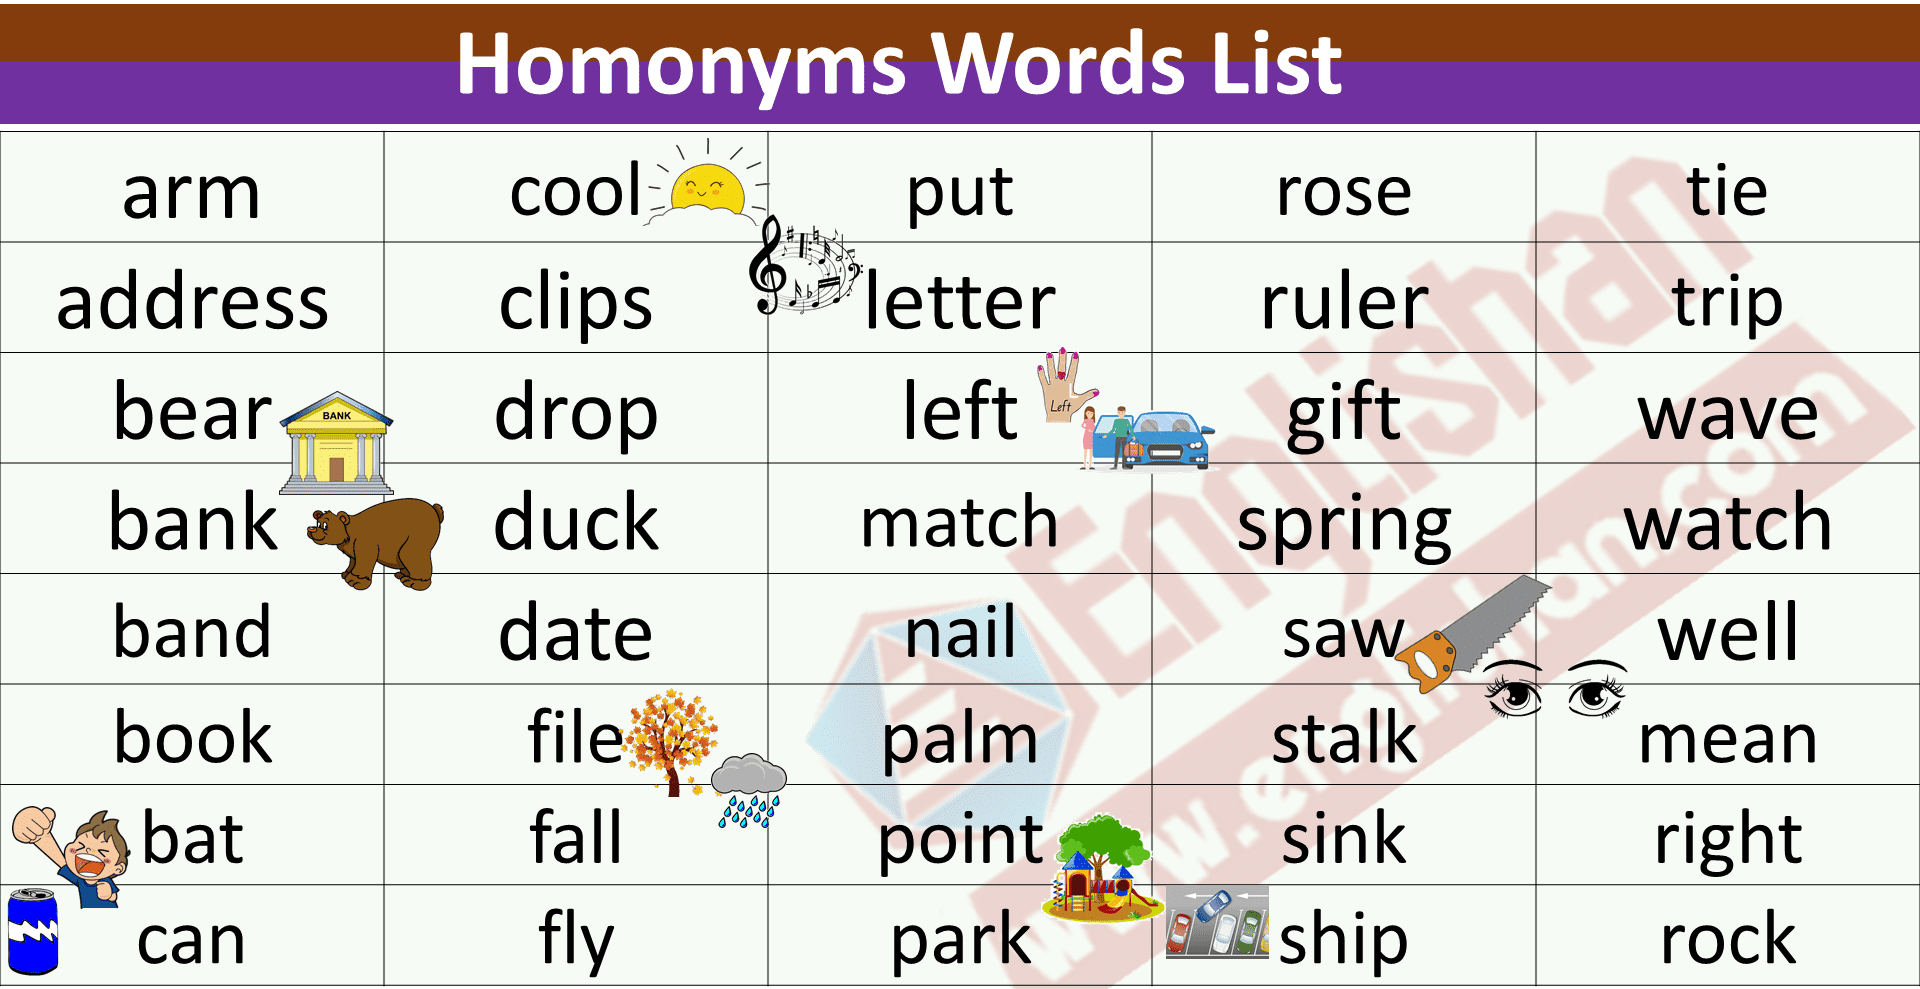 Homophones Words List - English Study Here